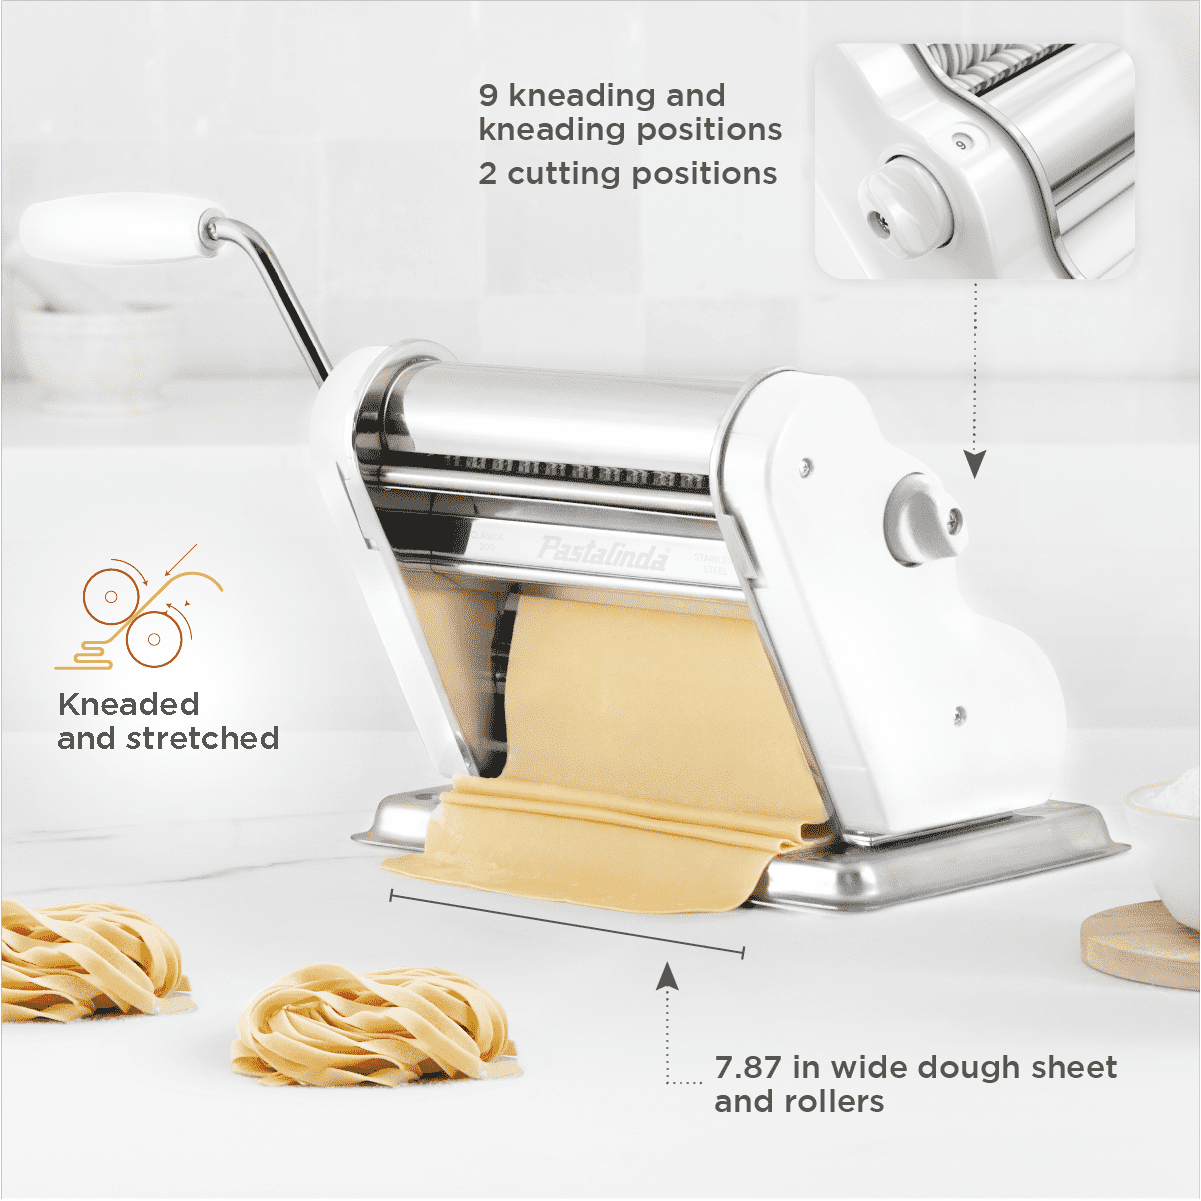 Pastalinda Classic 200 White Pasta Maker Machine With Hand Crank And Two Clamps - Pastalinda